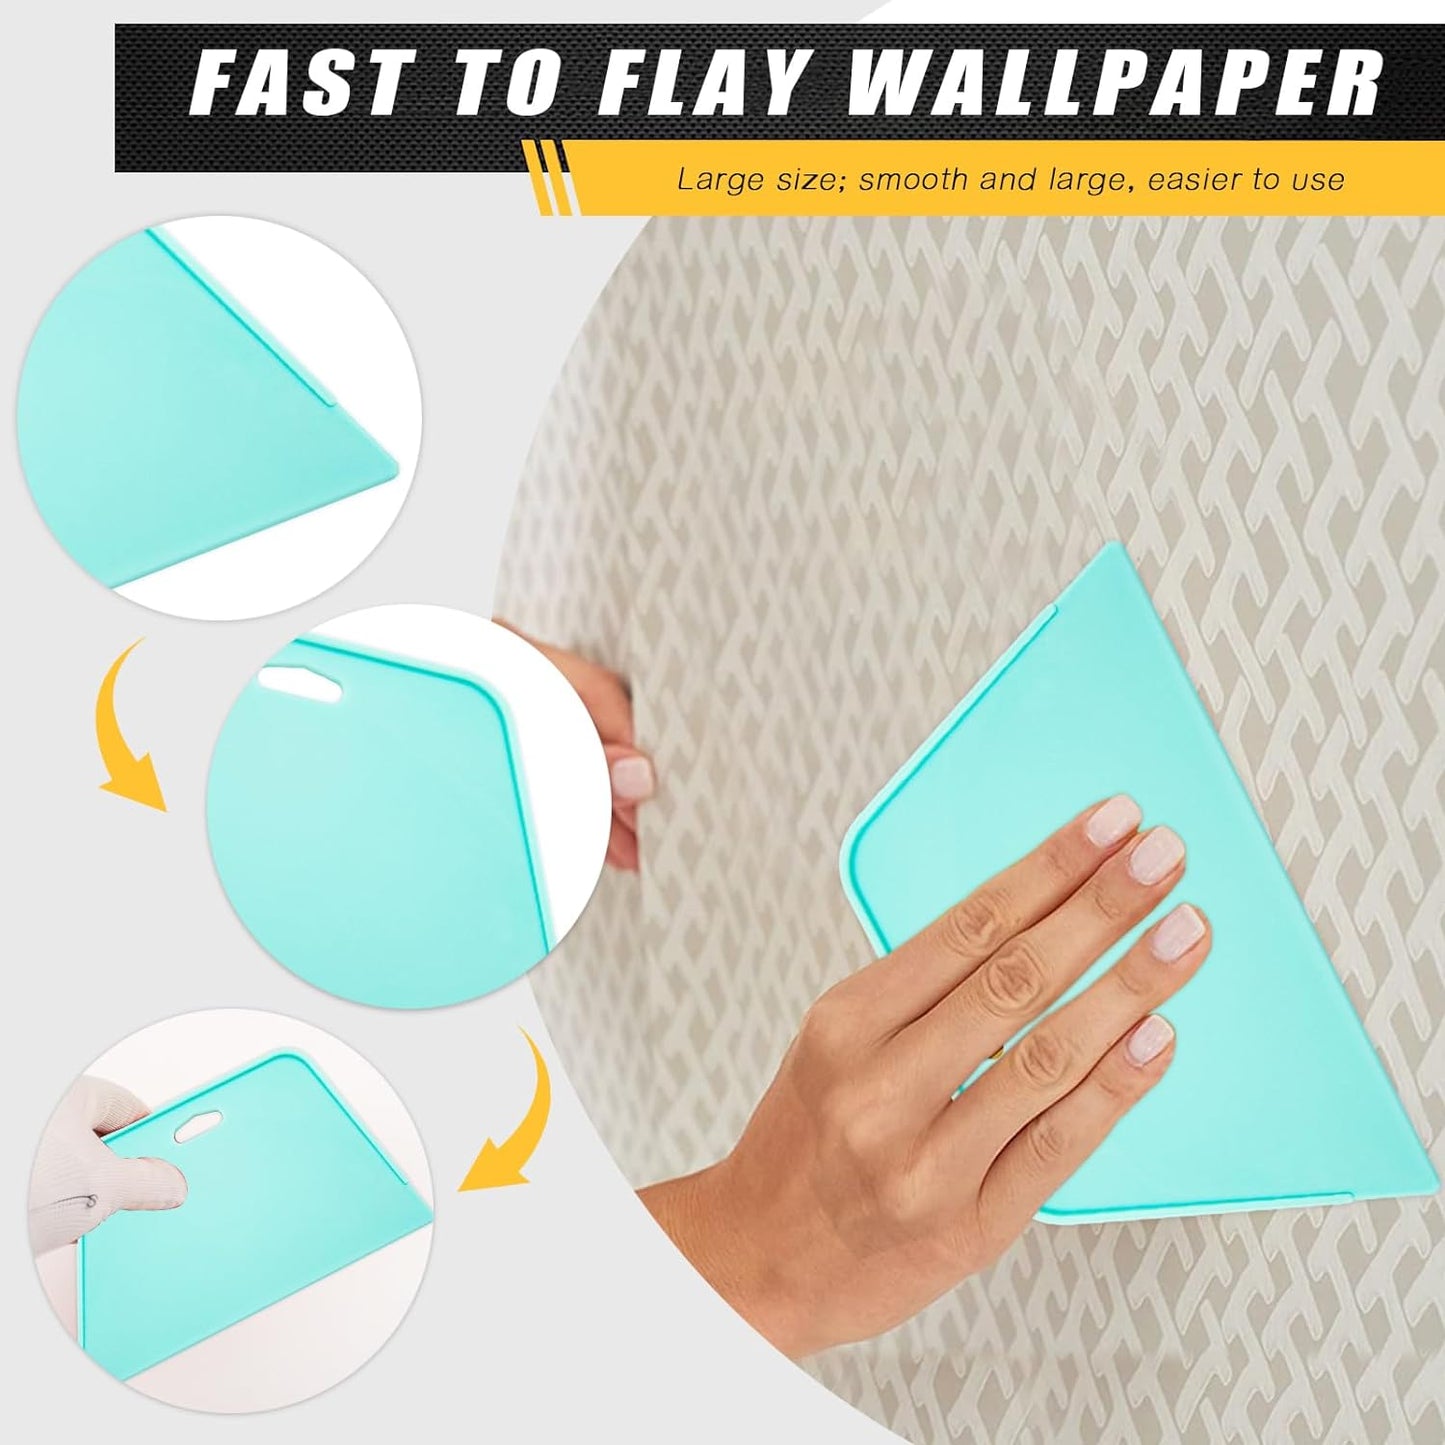 WRAPXERPT Wallpaper Smoothing Tool,Wallpaper Tool Kit for Peel and Stick Wallpaper Hanging,Vinyl Backsplash Tile,Bathroom,Window Film